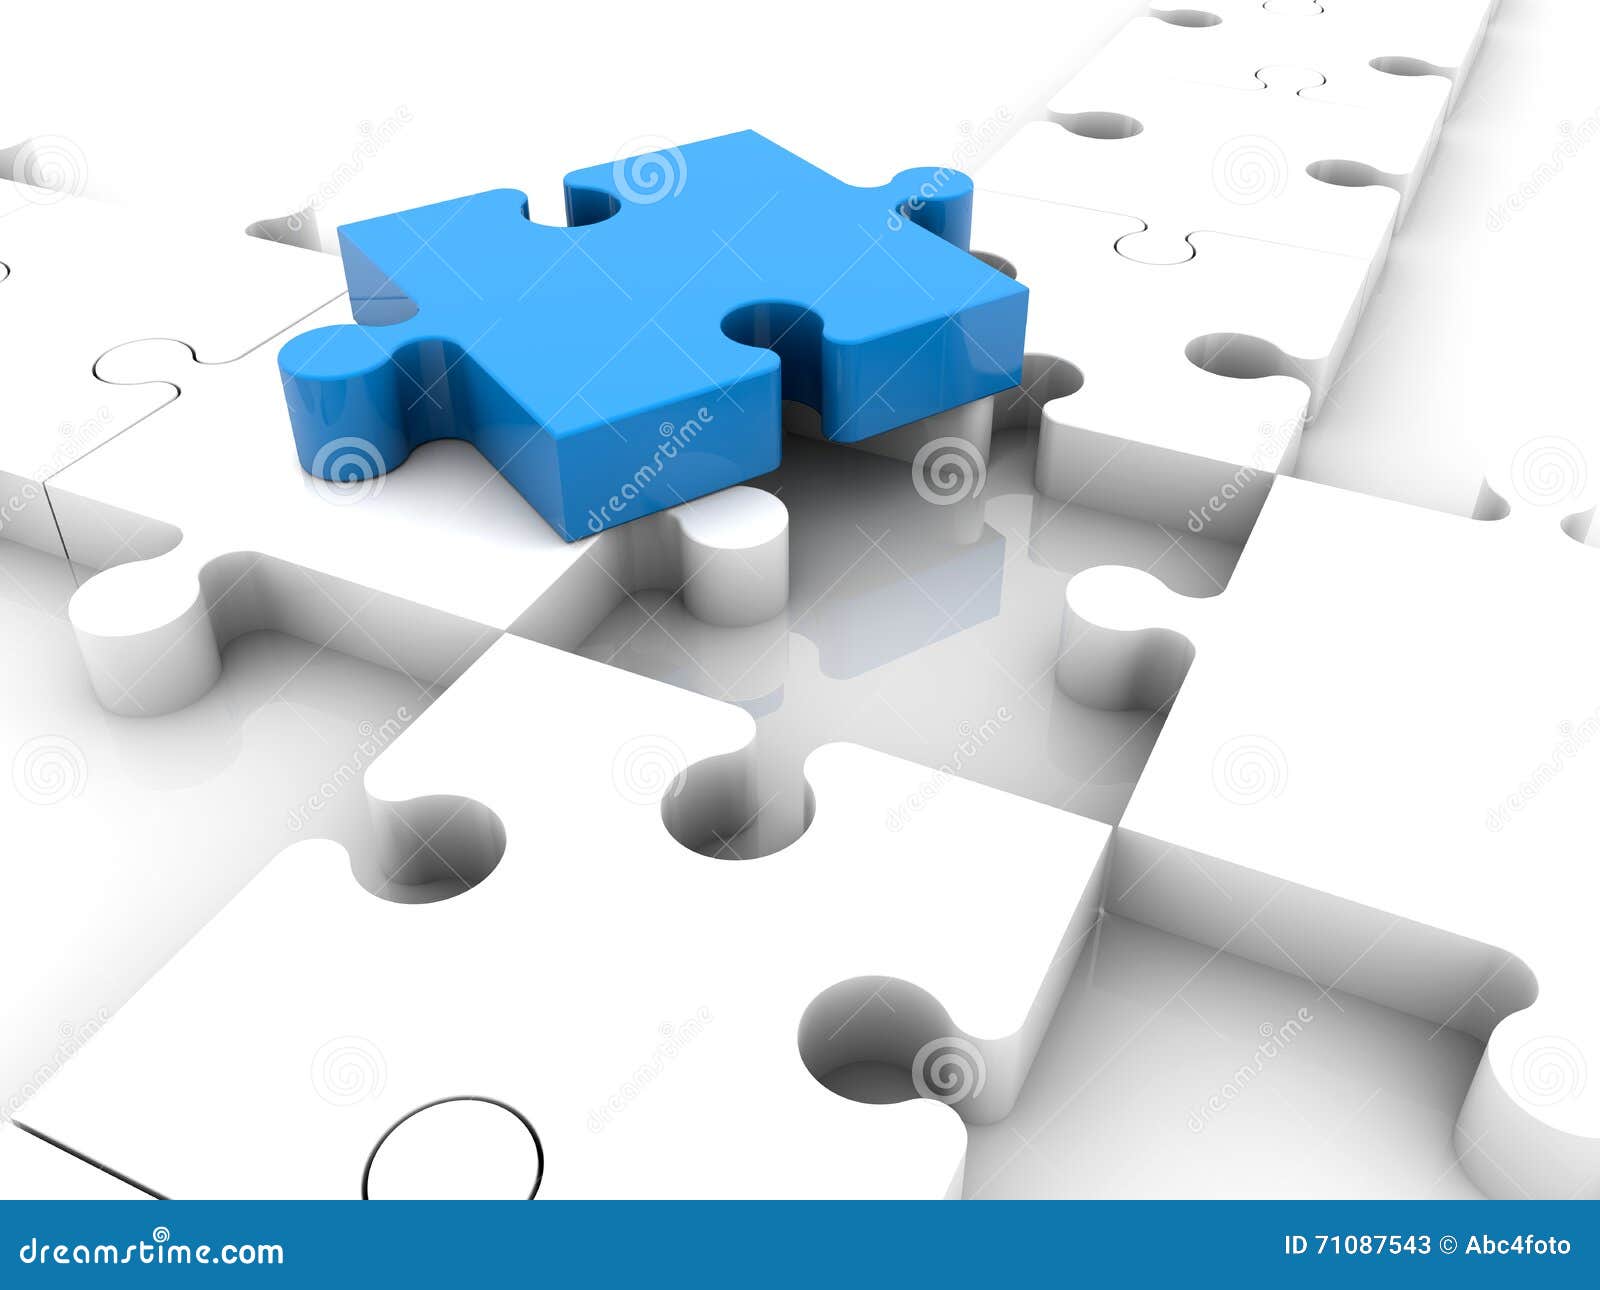 blue-puzzle-piece-on-white-puzzle-pieces-near-hole-stock-illustration